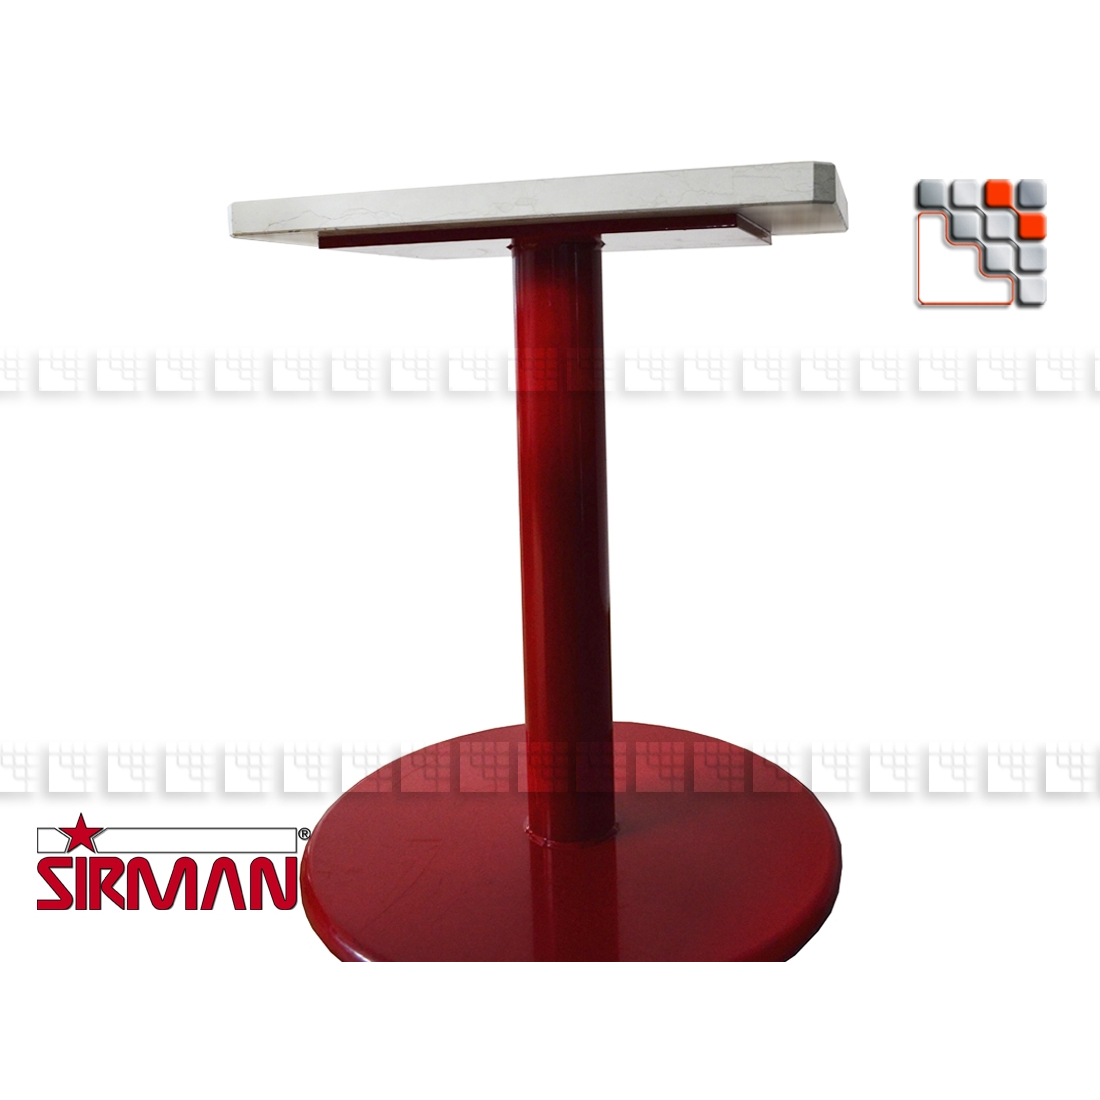 Red Slicer Pedestal SIRMAN S31-11001000 SIRMAN® Manual Slicers BERKEL